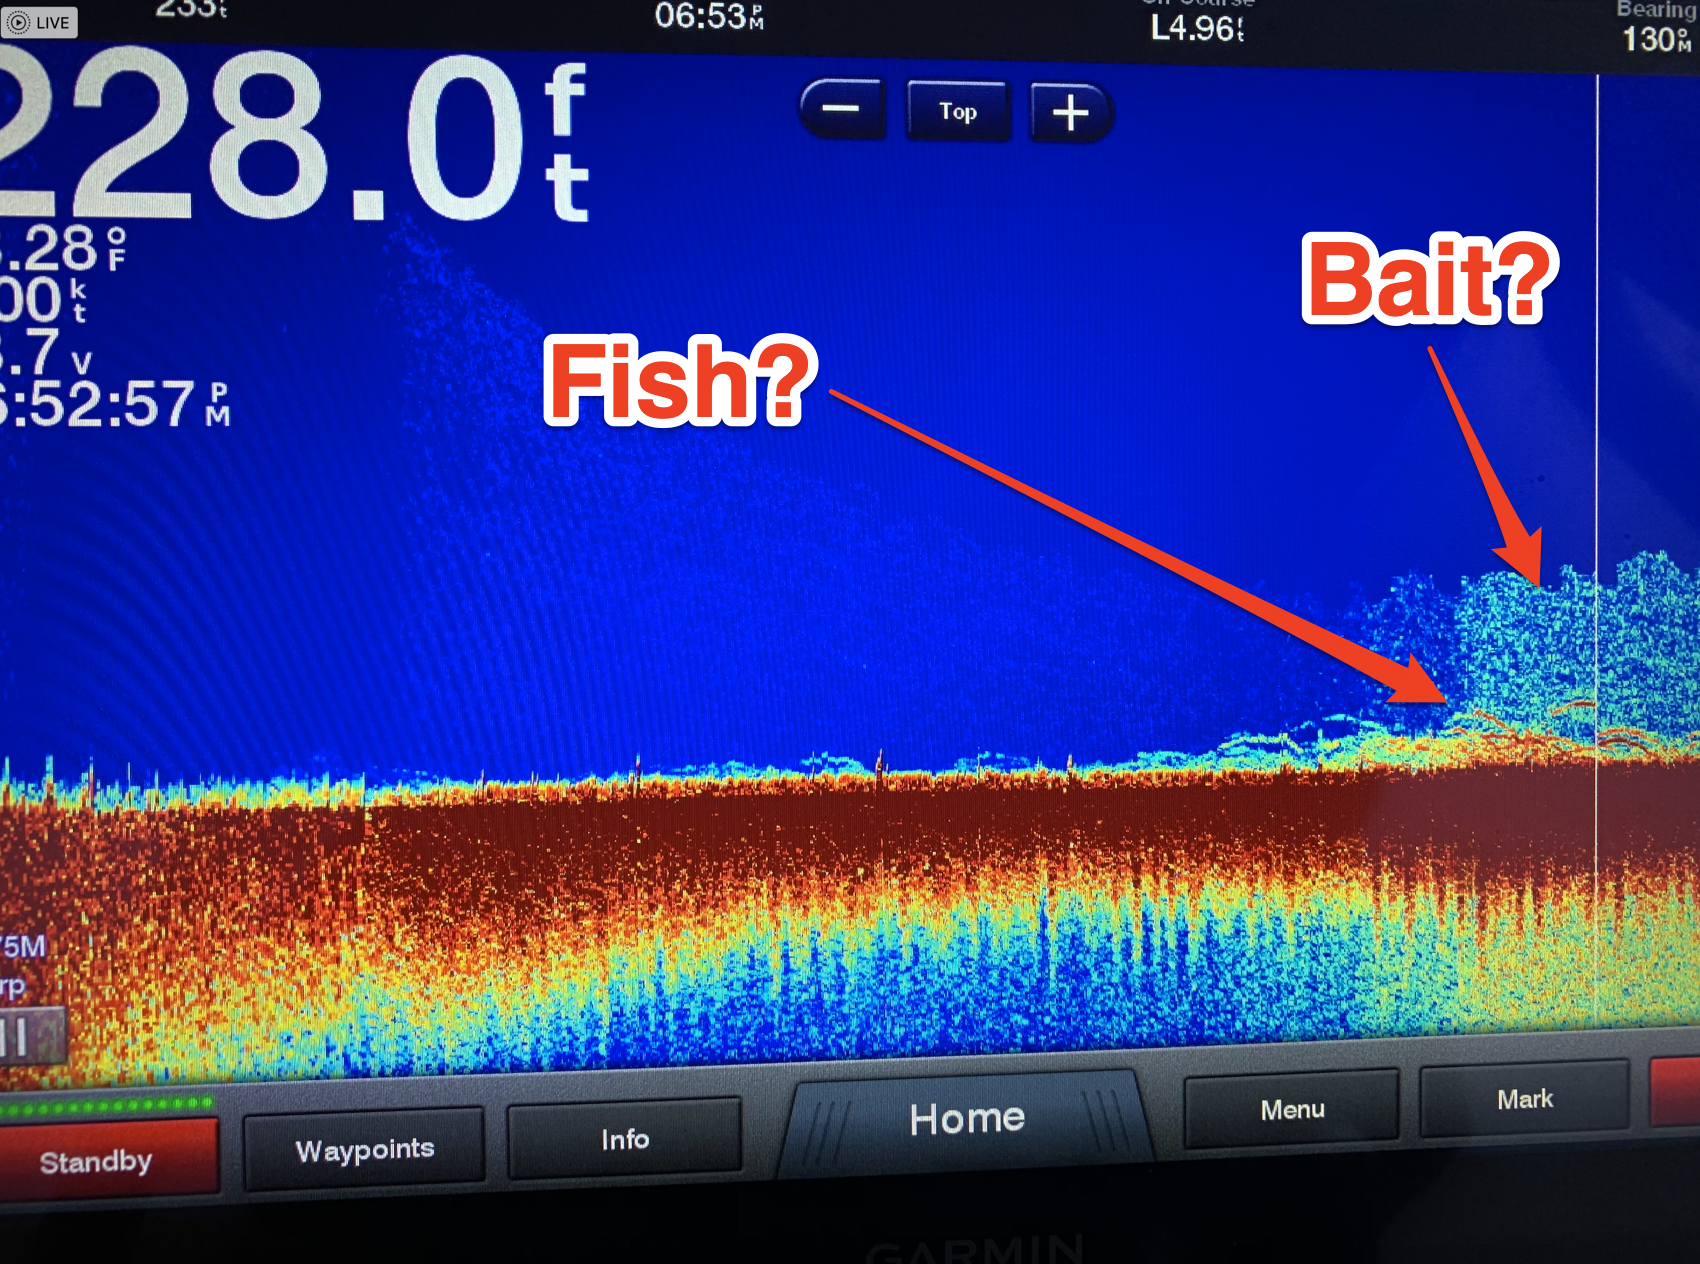 Garmin 7612 + Airmar B175M - best settings for bottom fish? - The